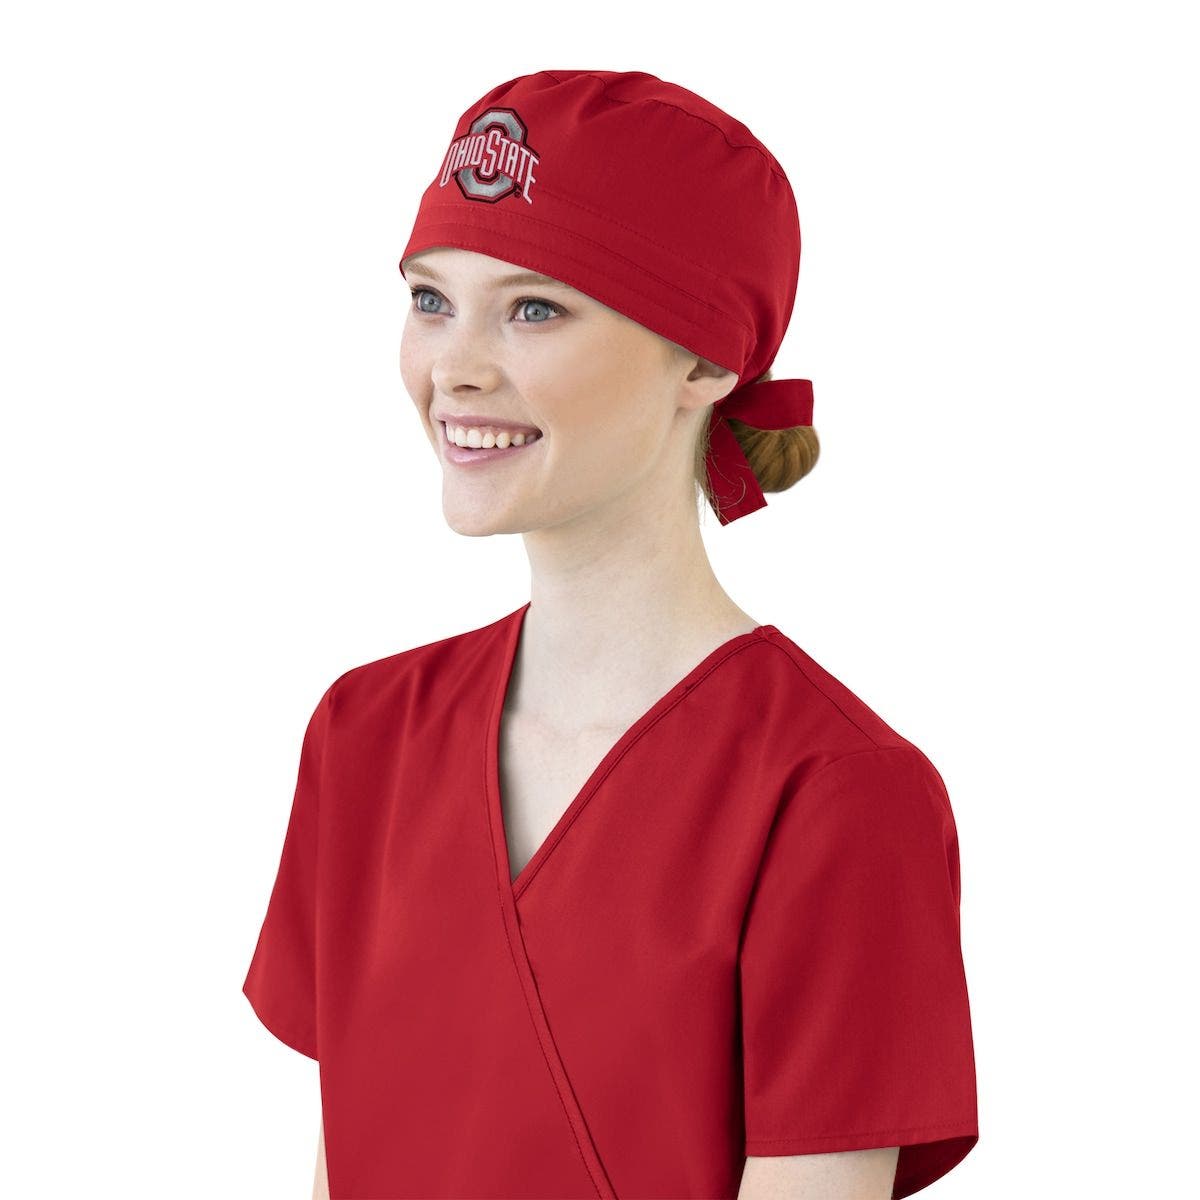 Stone Scrub cap/Scrub Cap canada/Scrub hat/Scrub hat canada/surgical cap/surgical cap canada